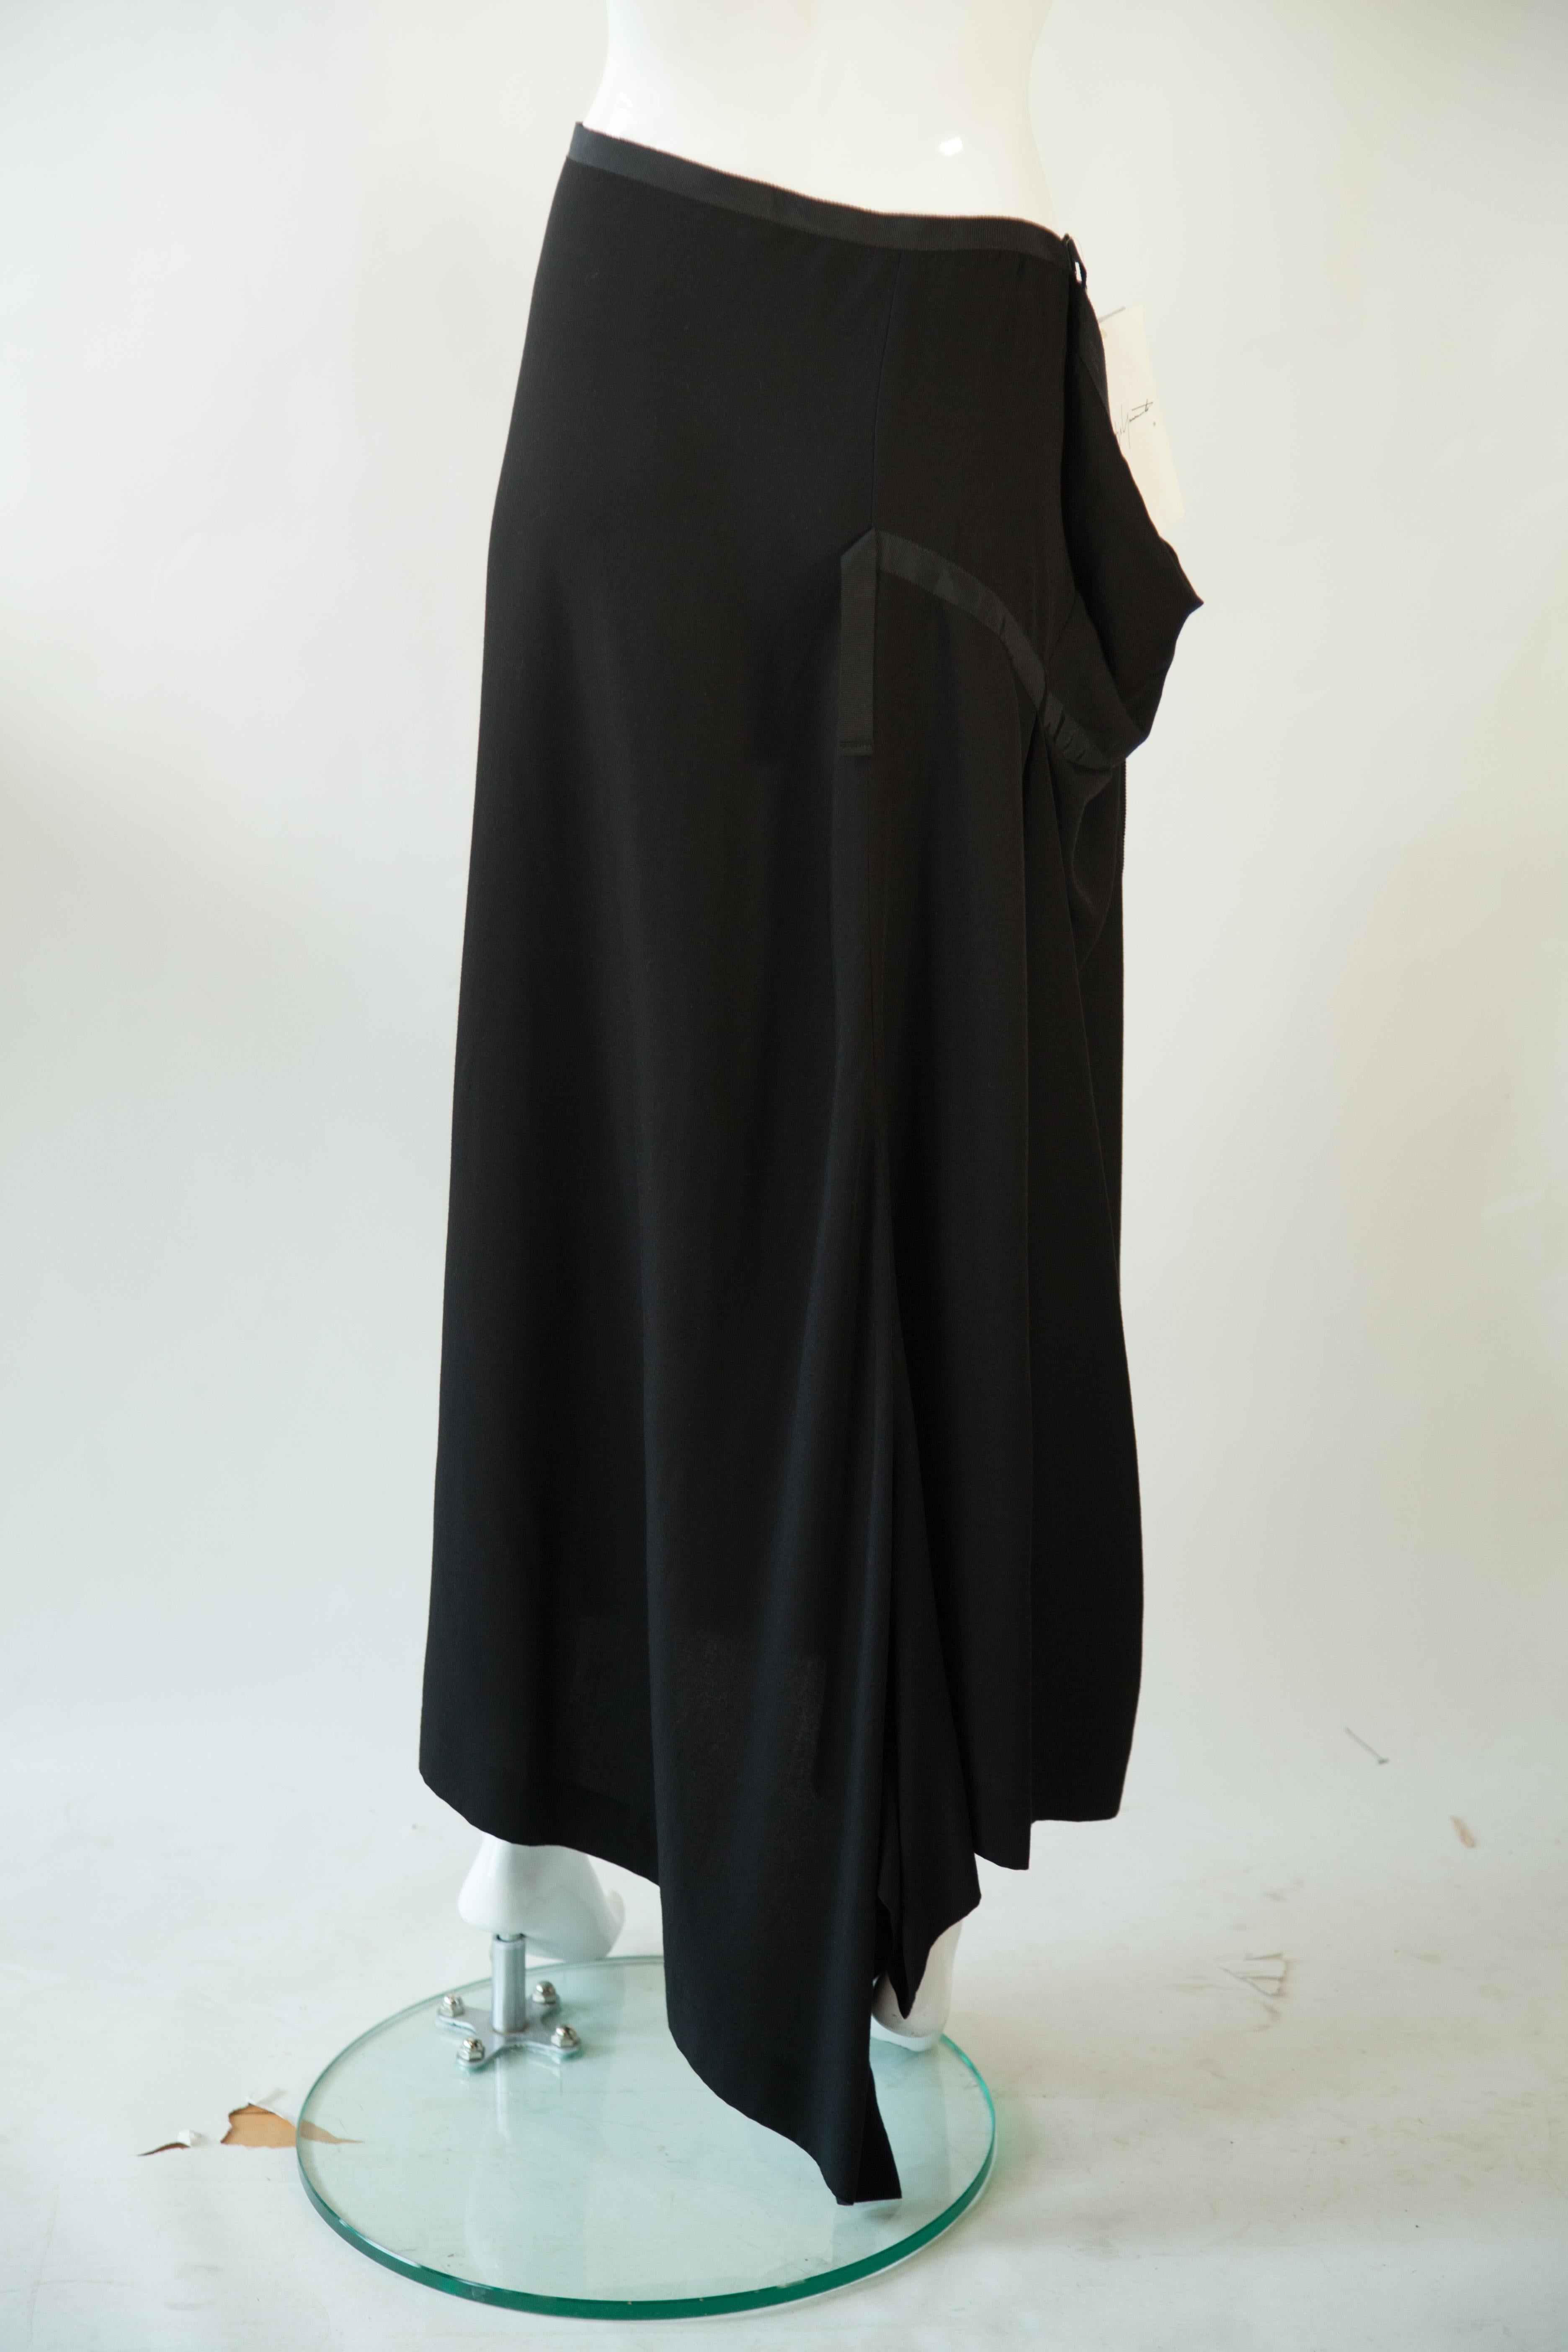 Yohji Yamamoto, Black Multi-Functional Shift Dress and Skirt For Sale 1